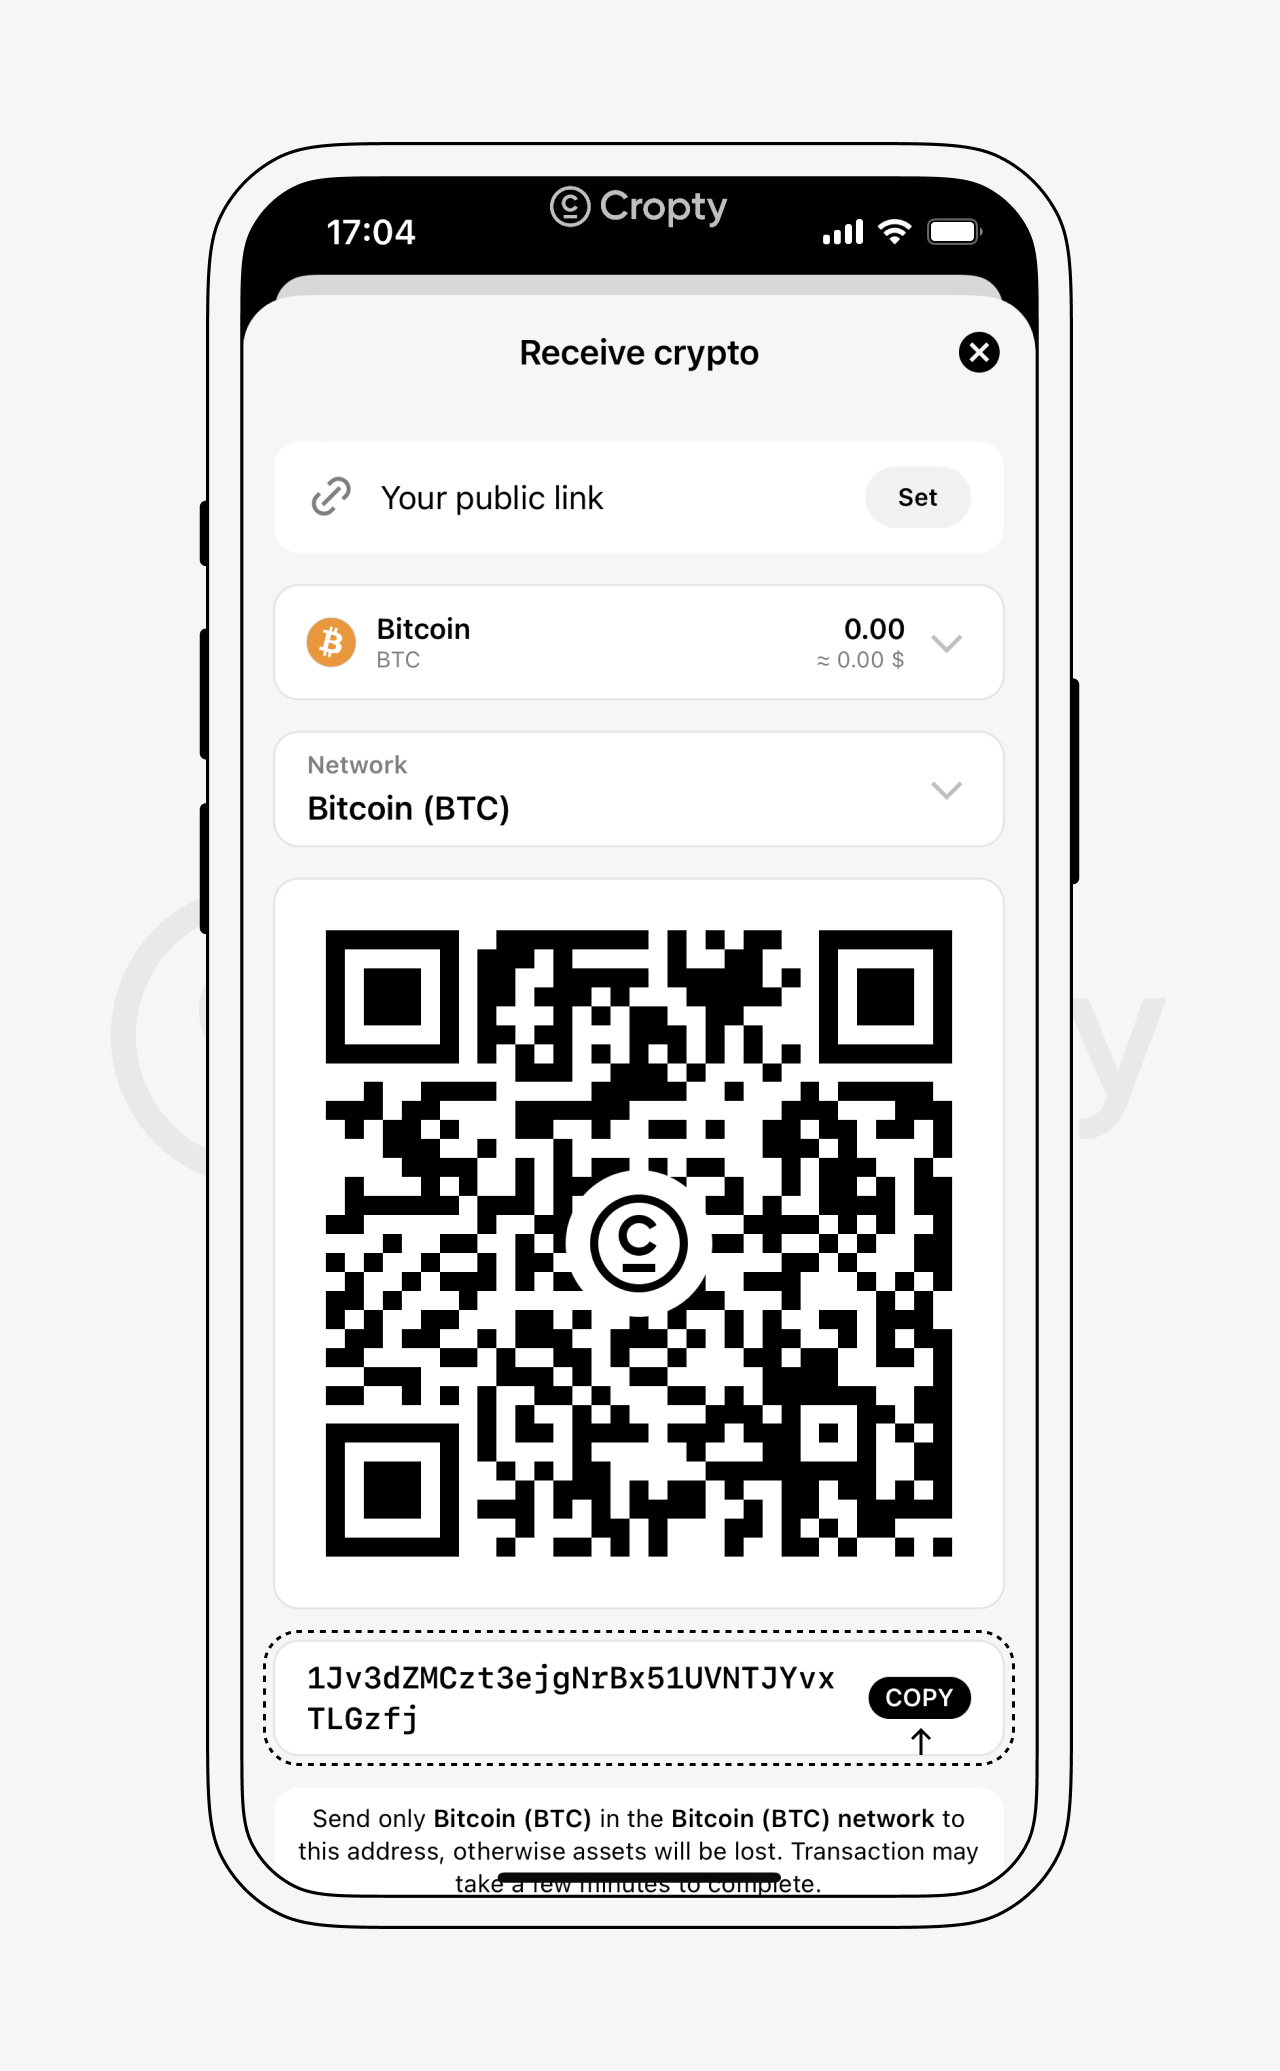 bitcoin wallet address location in Cropty wallet